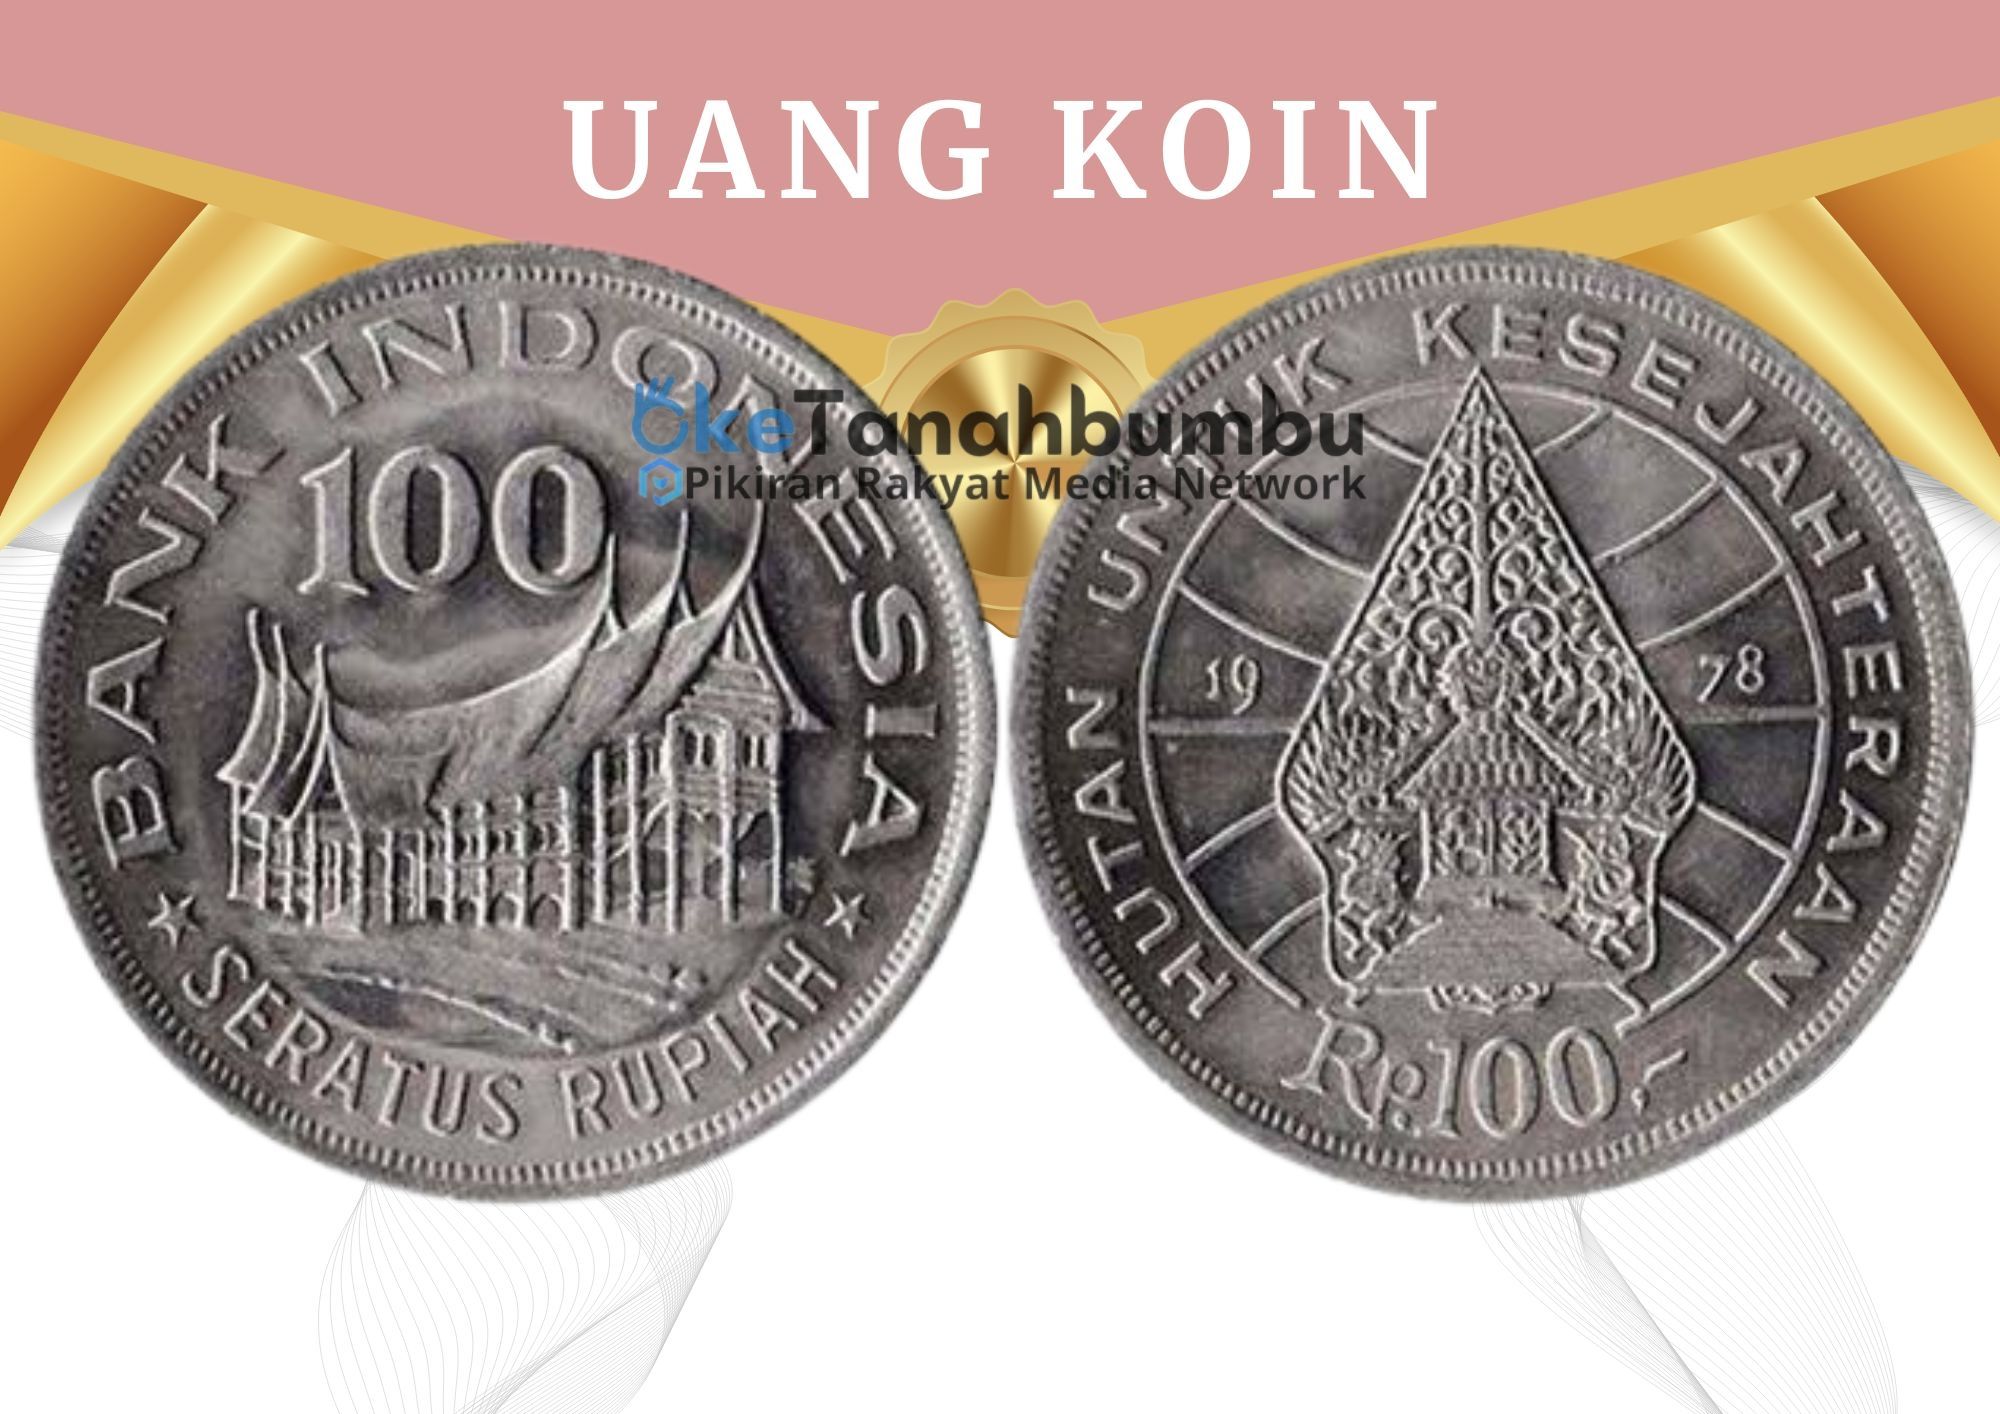 Uang Koin Rp 100 Tahun Emisi 1978